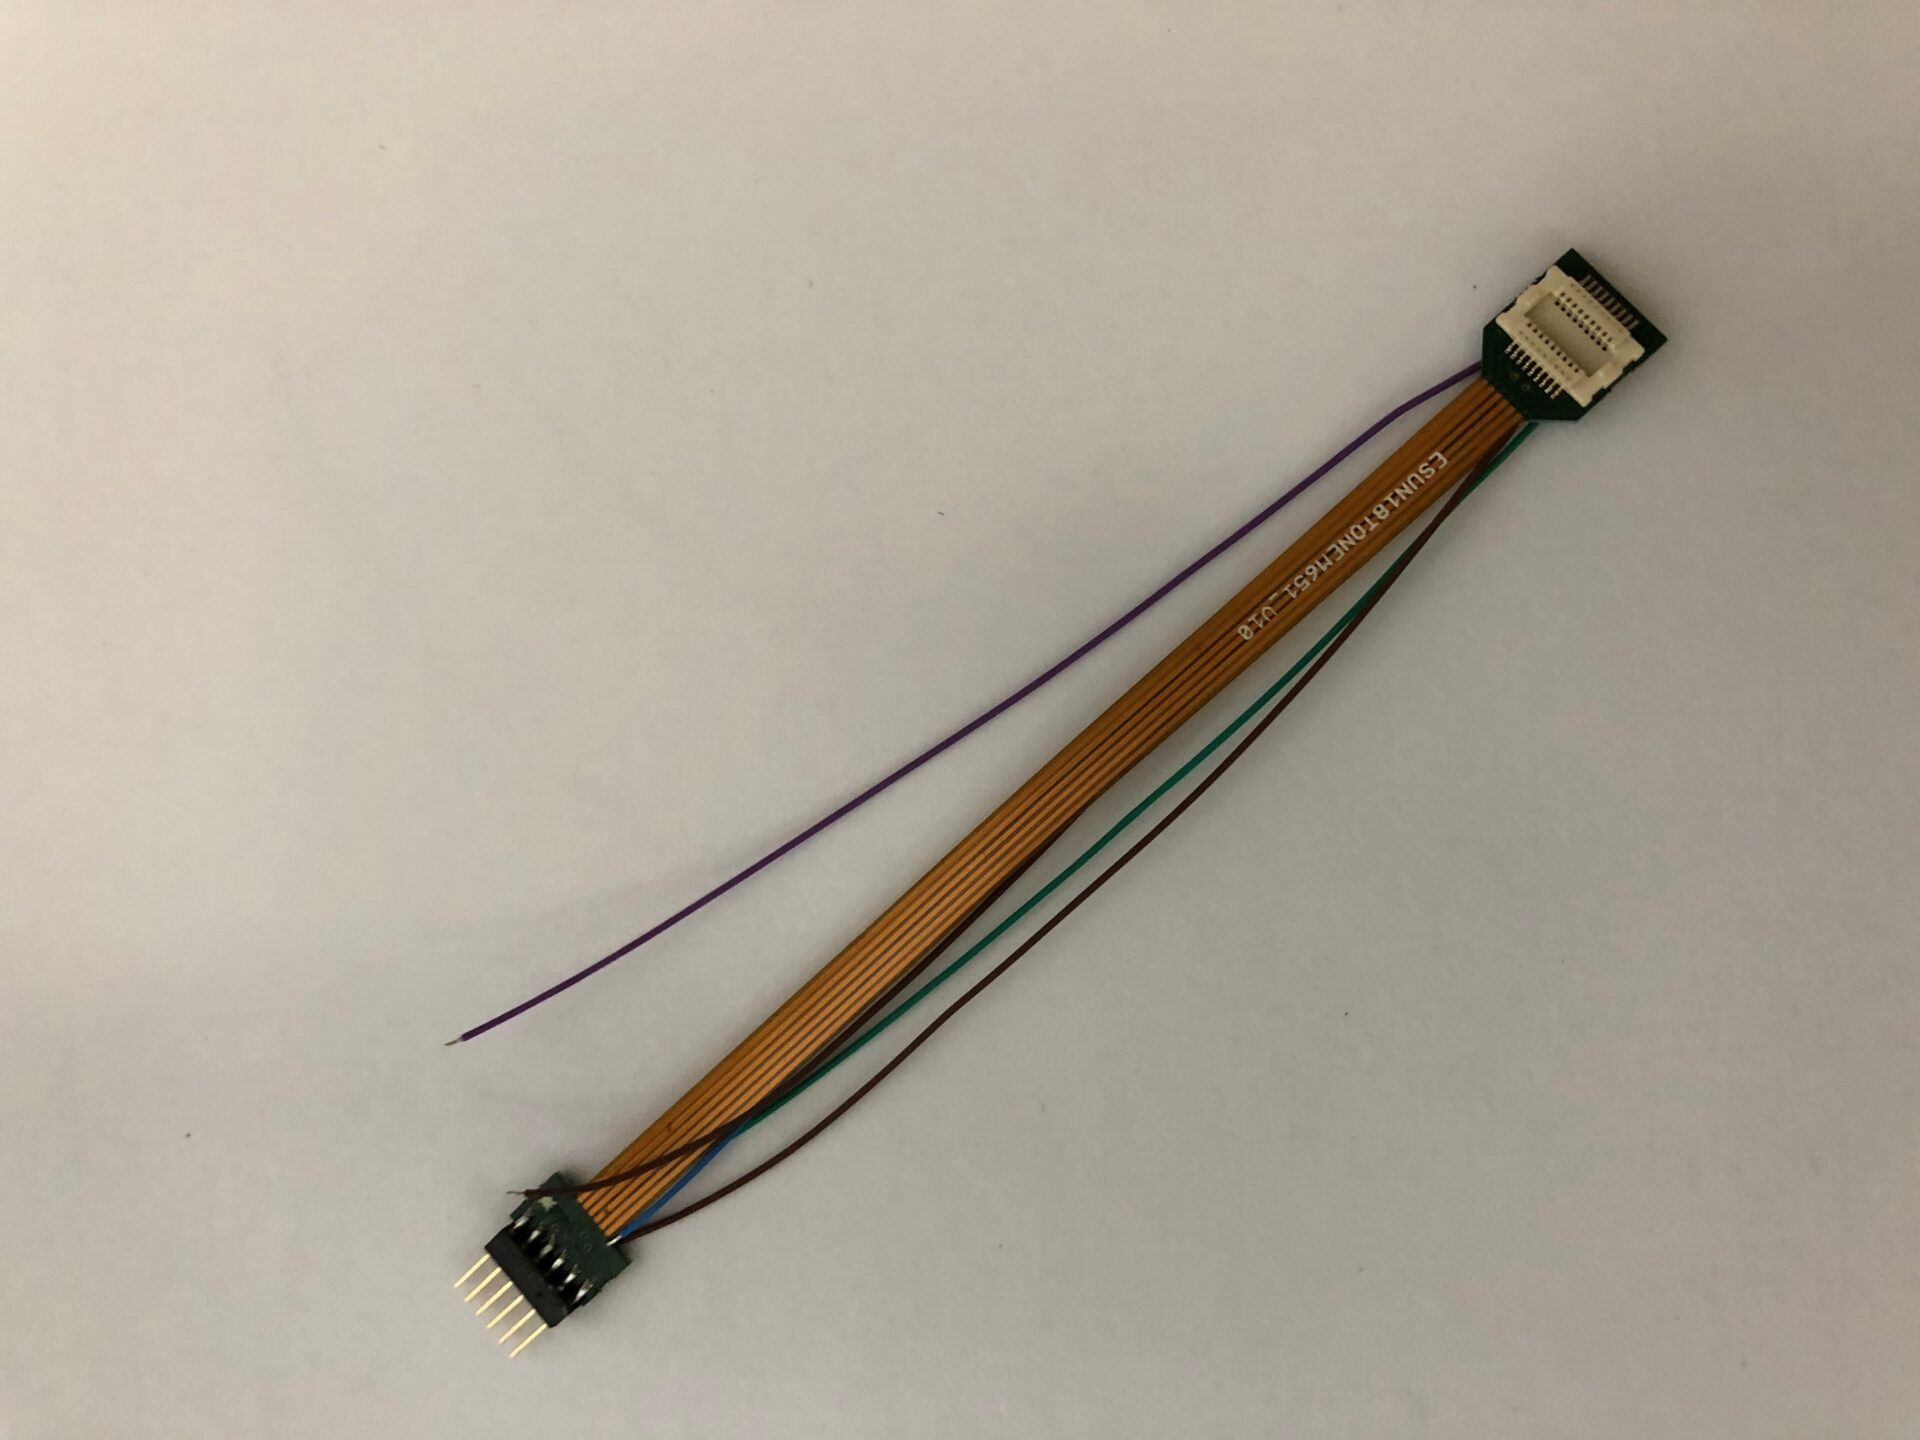 Adapter board, 18-pin Next-18 socket to NEM651 6-pin, Flex, 88mm, with heat shrink tube – #397-51994